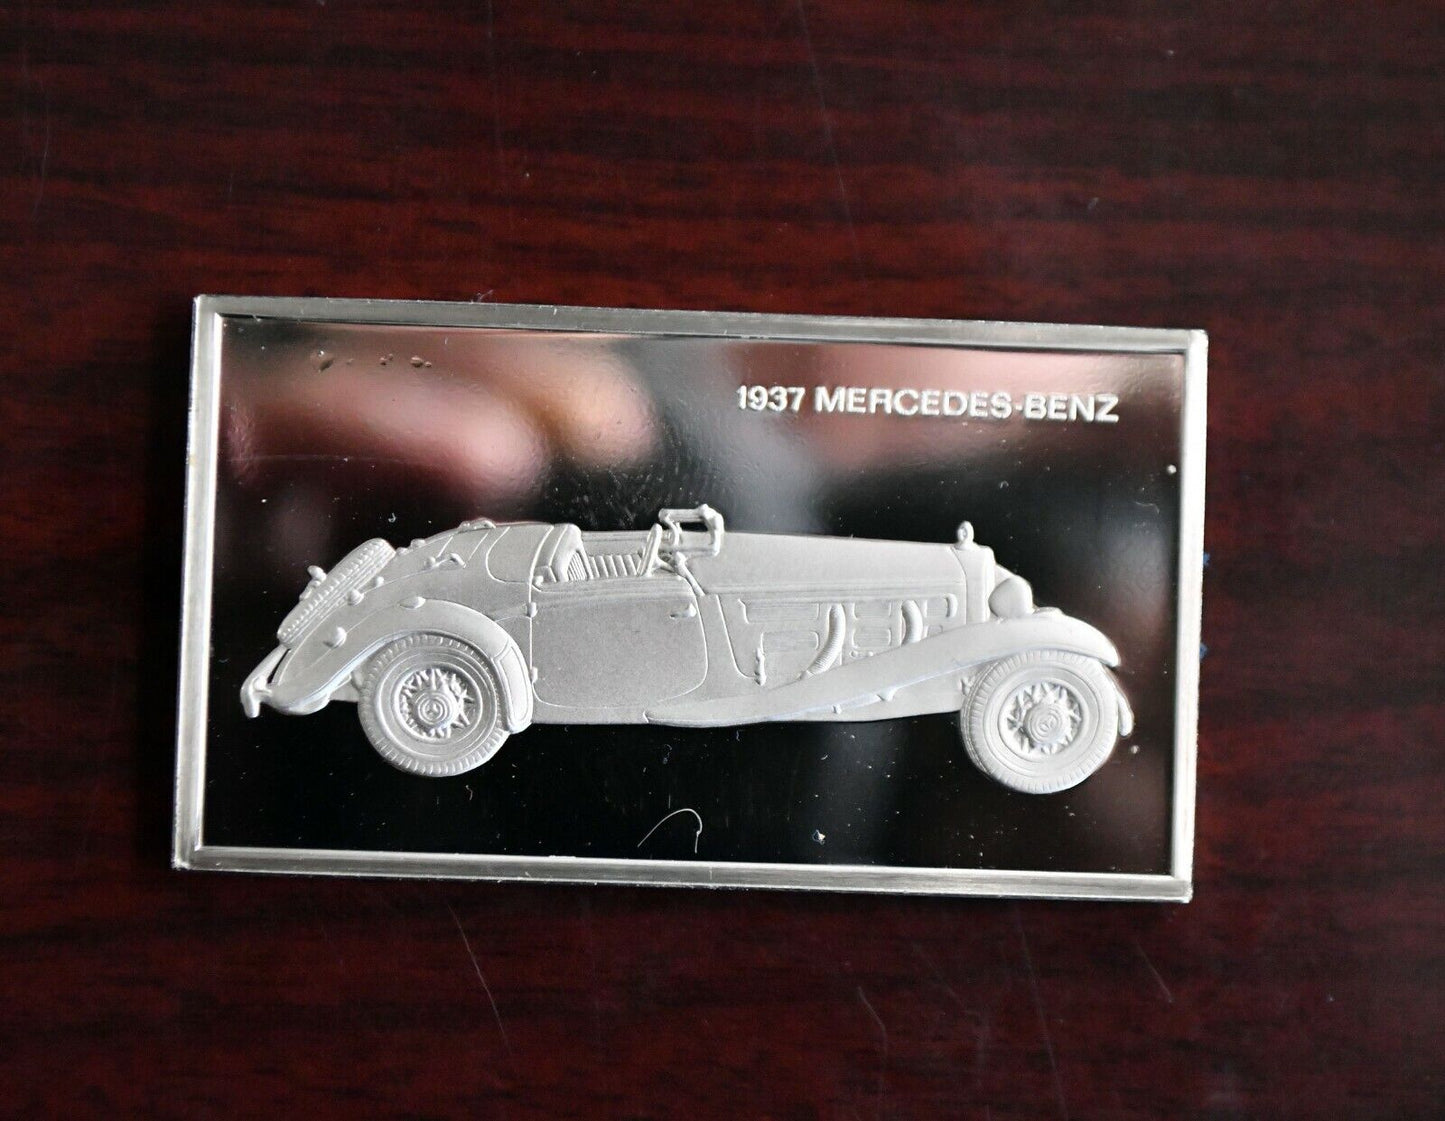 1937 Mercedes Benz Centennial Car Collection 1000 Grains Sterling Franklin Mint